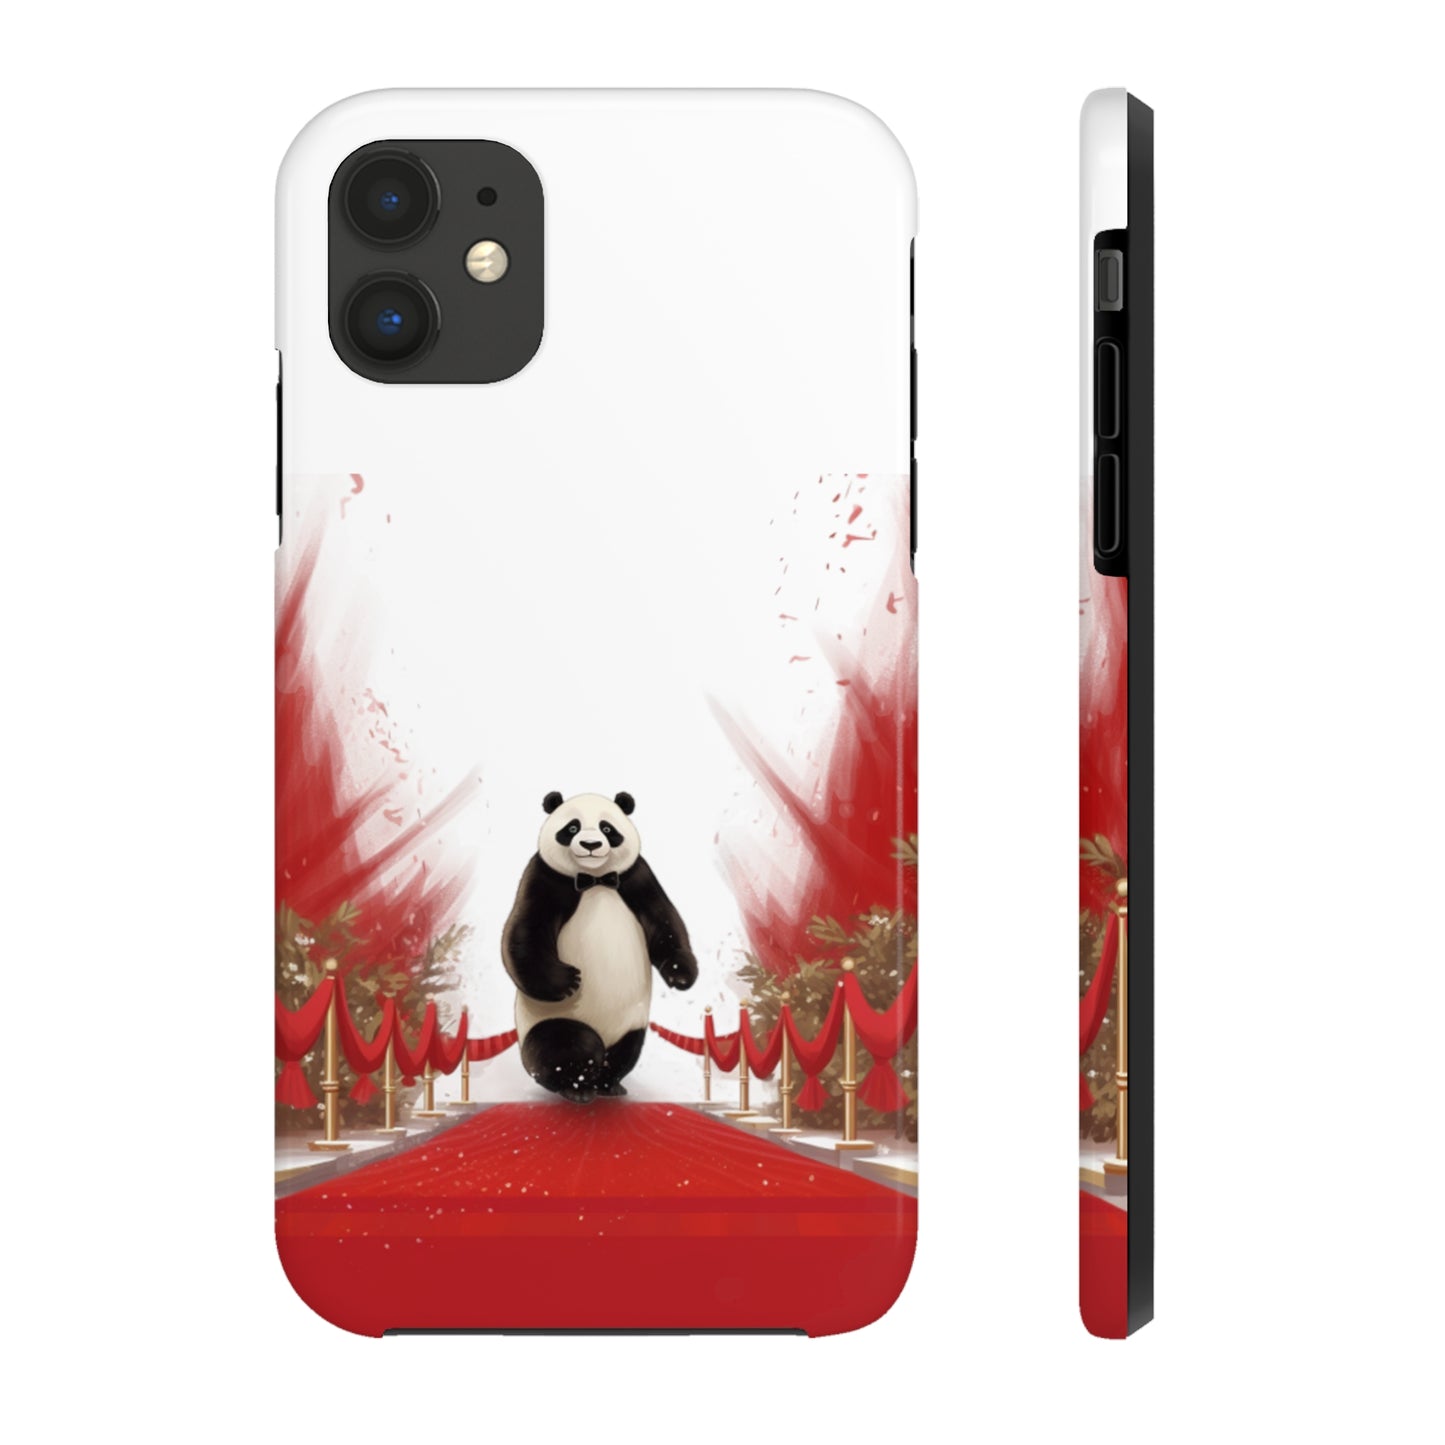 Bamboo Film Festival: Glamorous Comic Panda Walking Down a Red Carpet